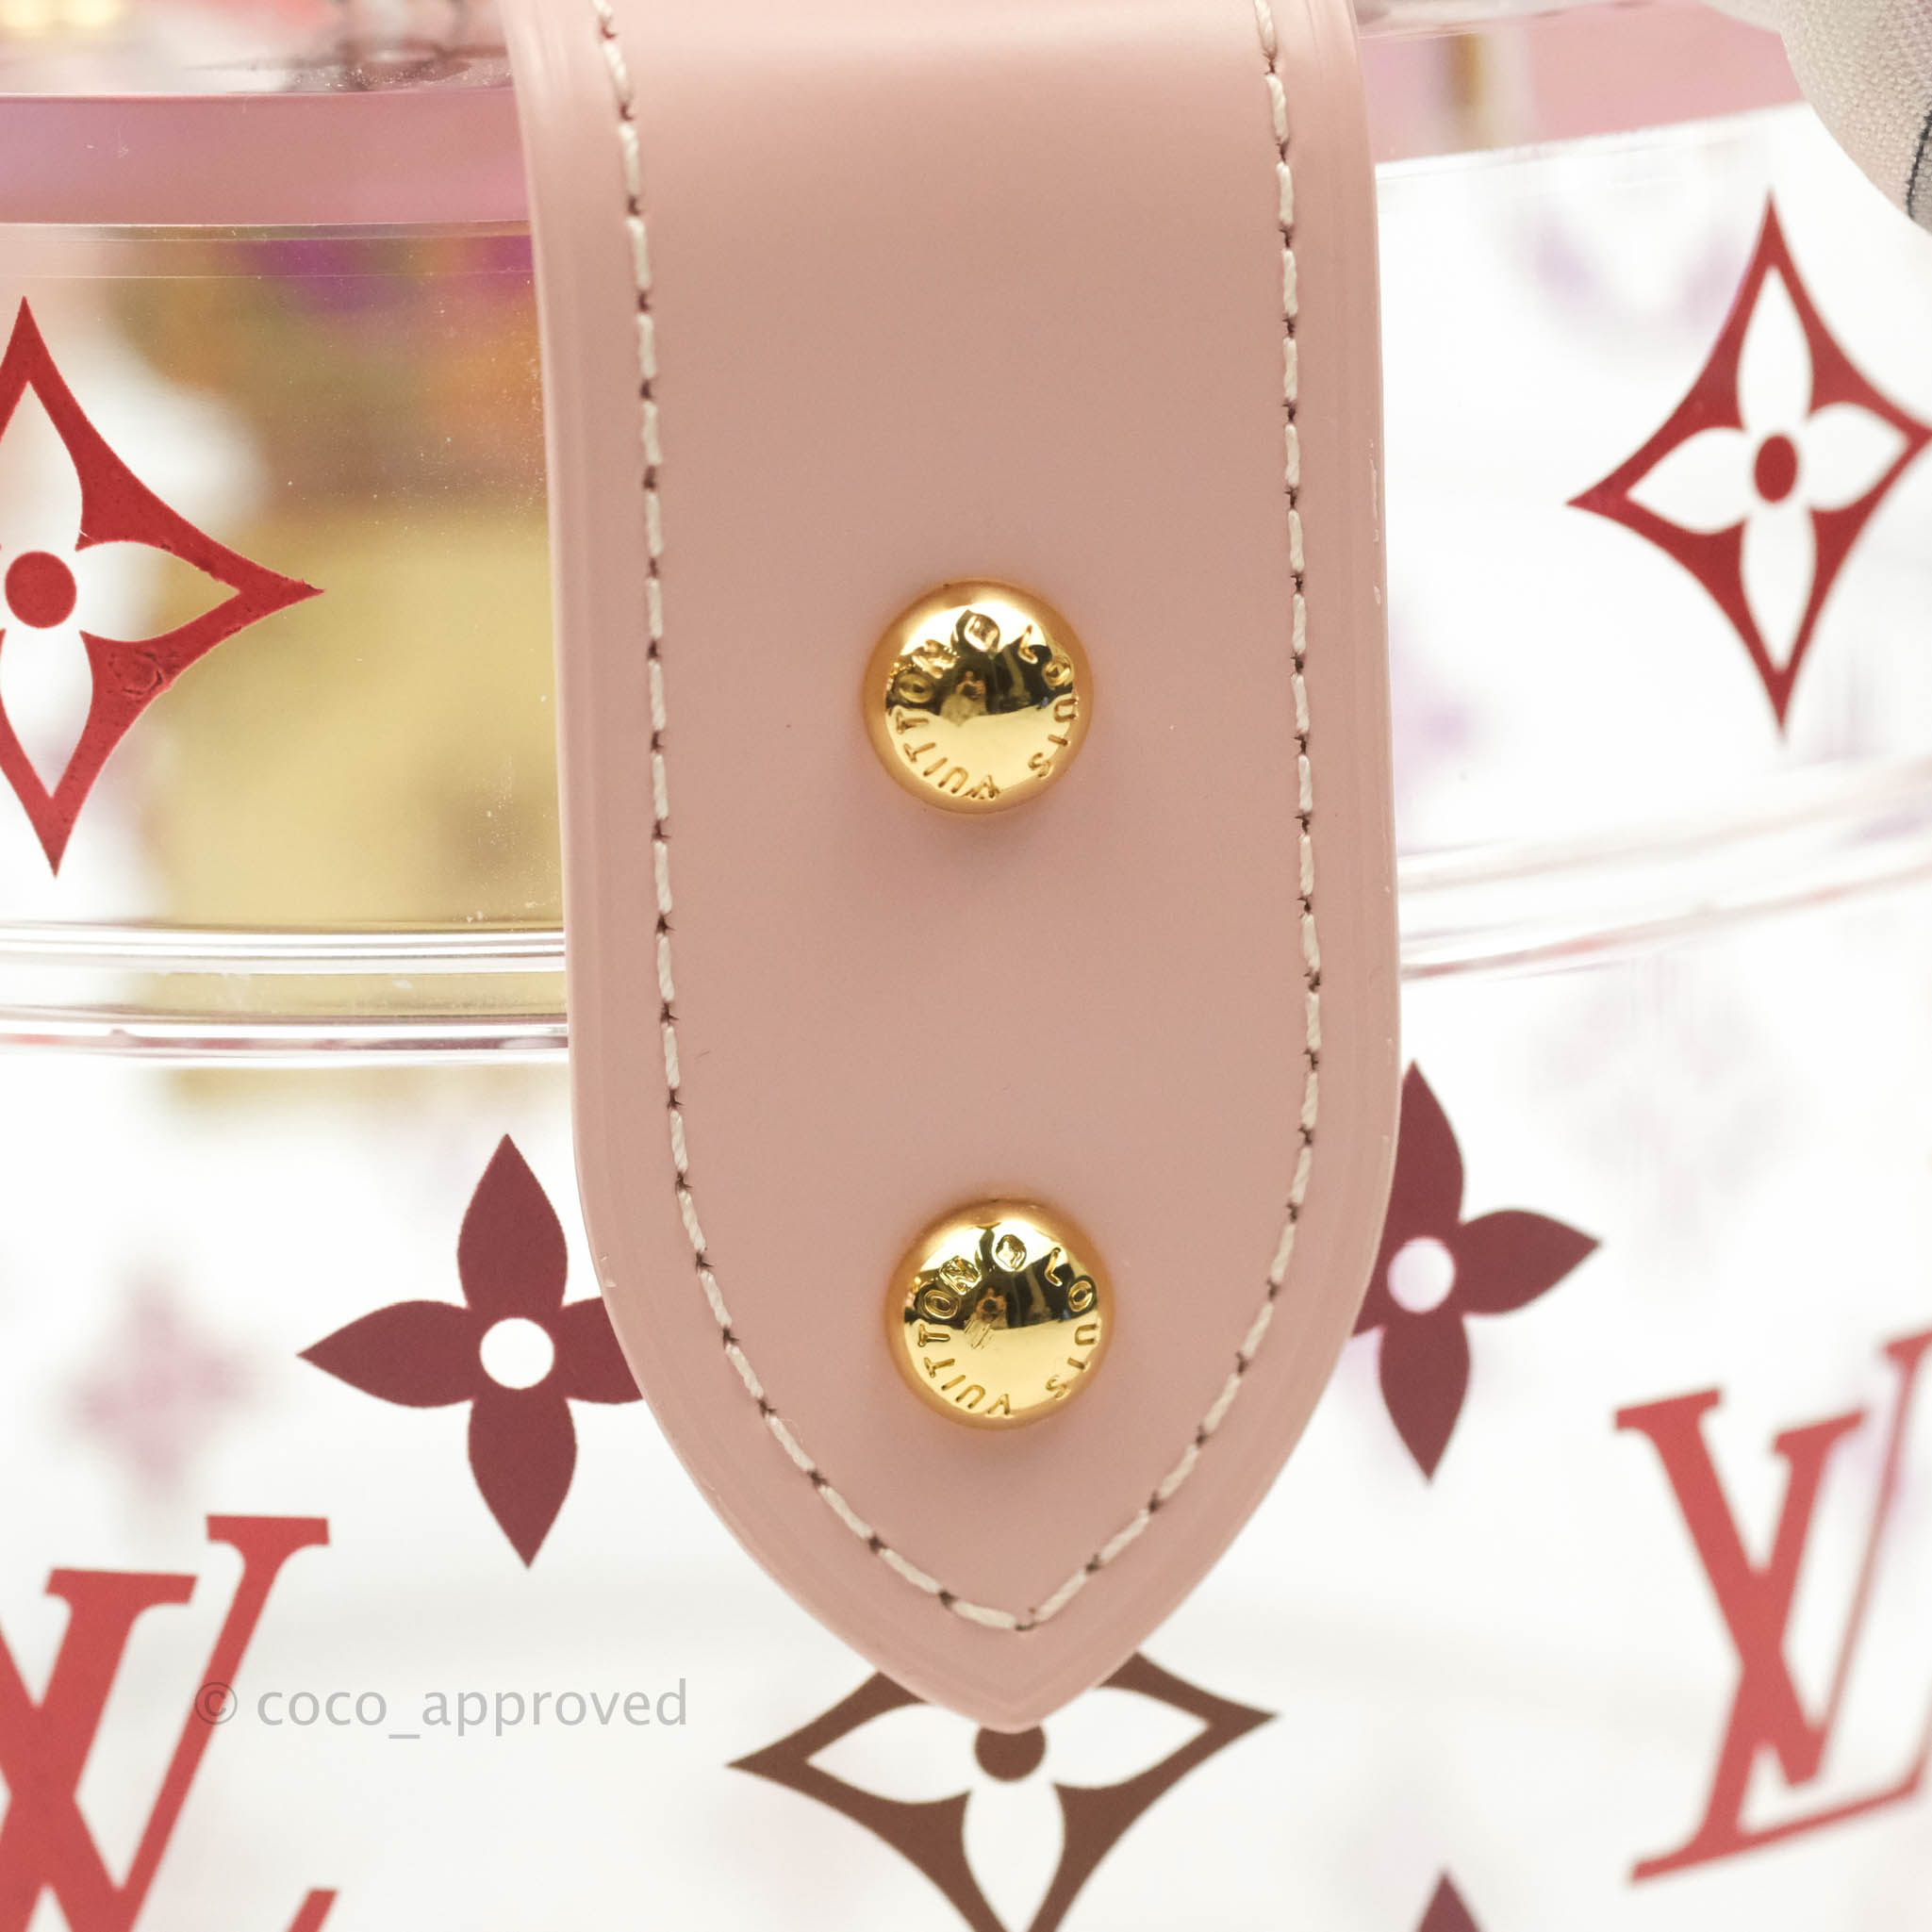 Louis Vuitton Scott Box with Pink & Red Motifs